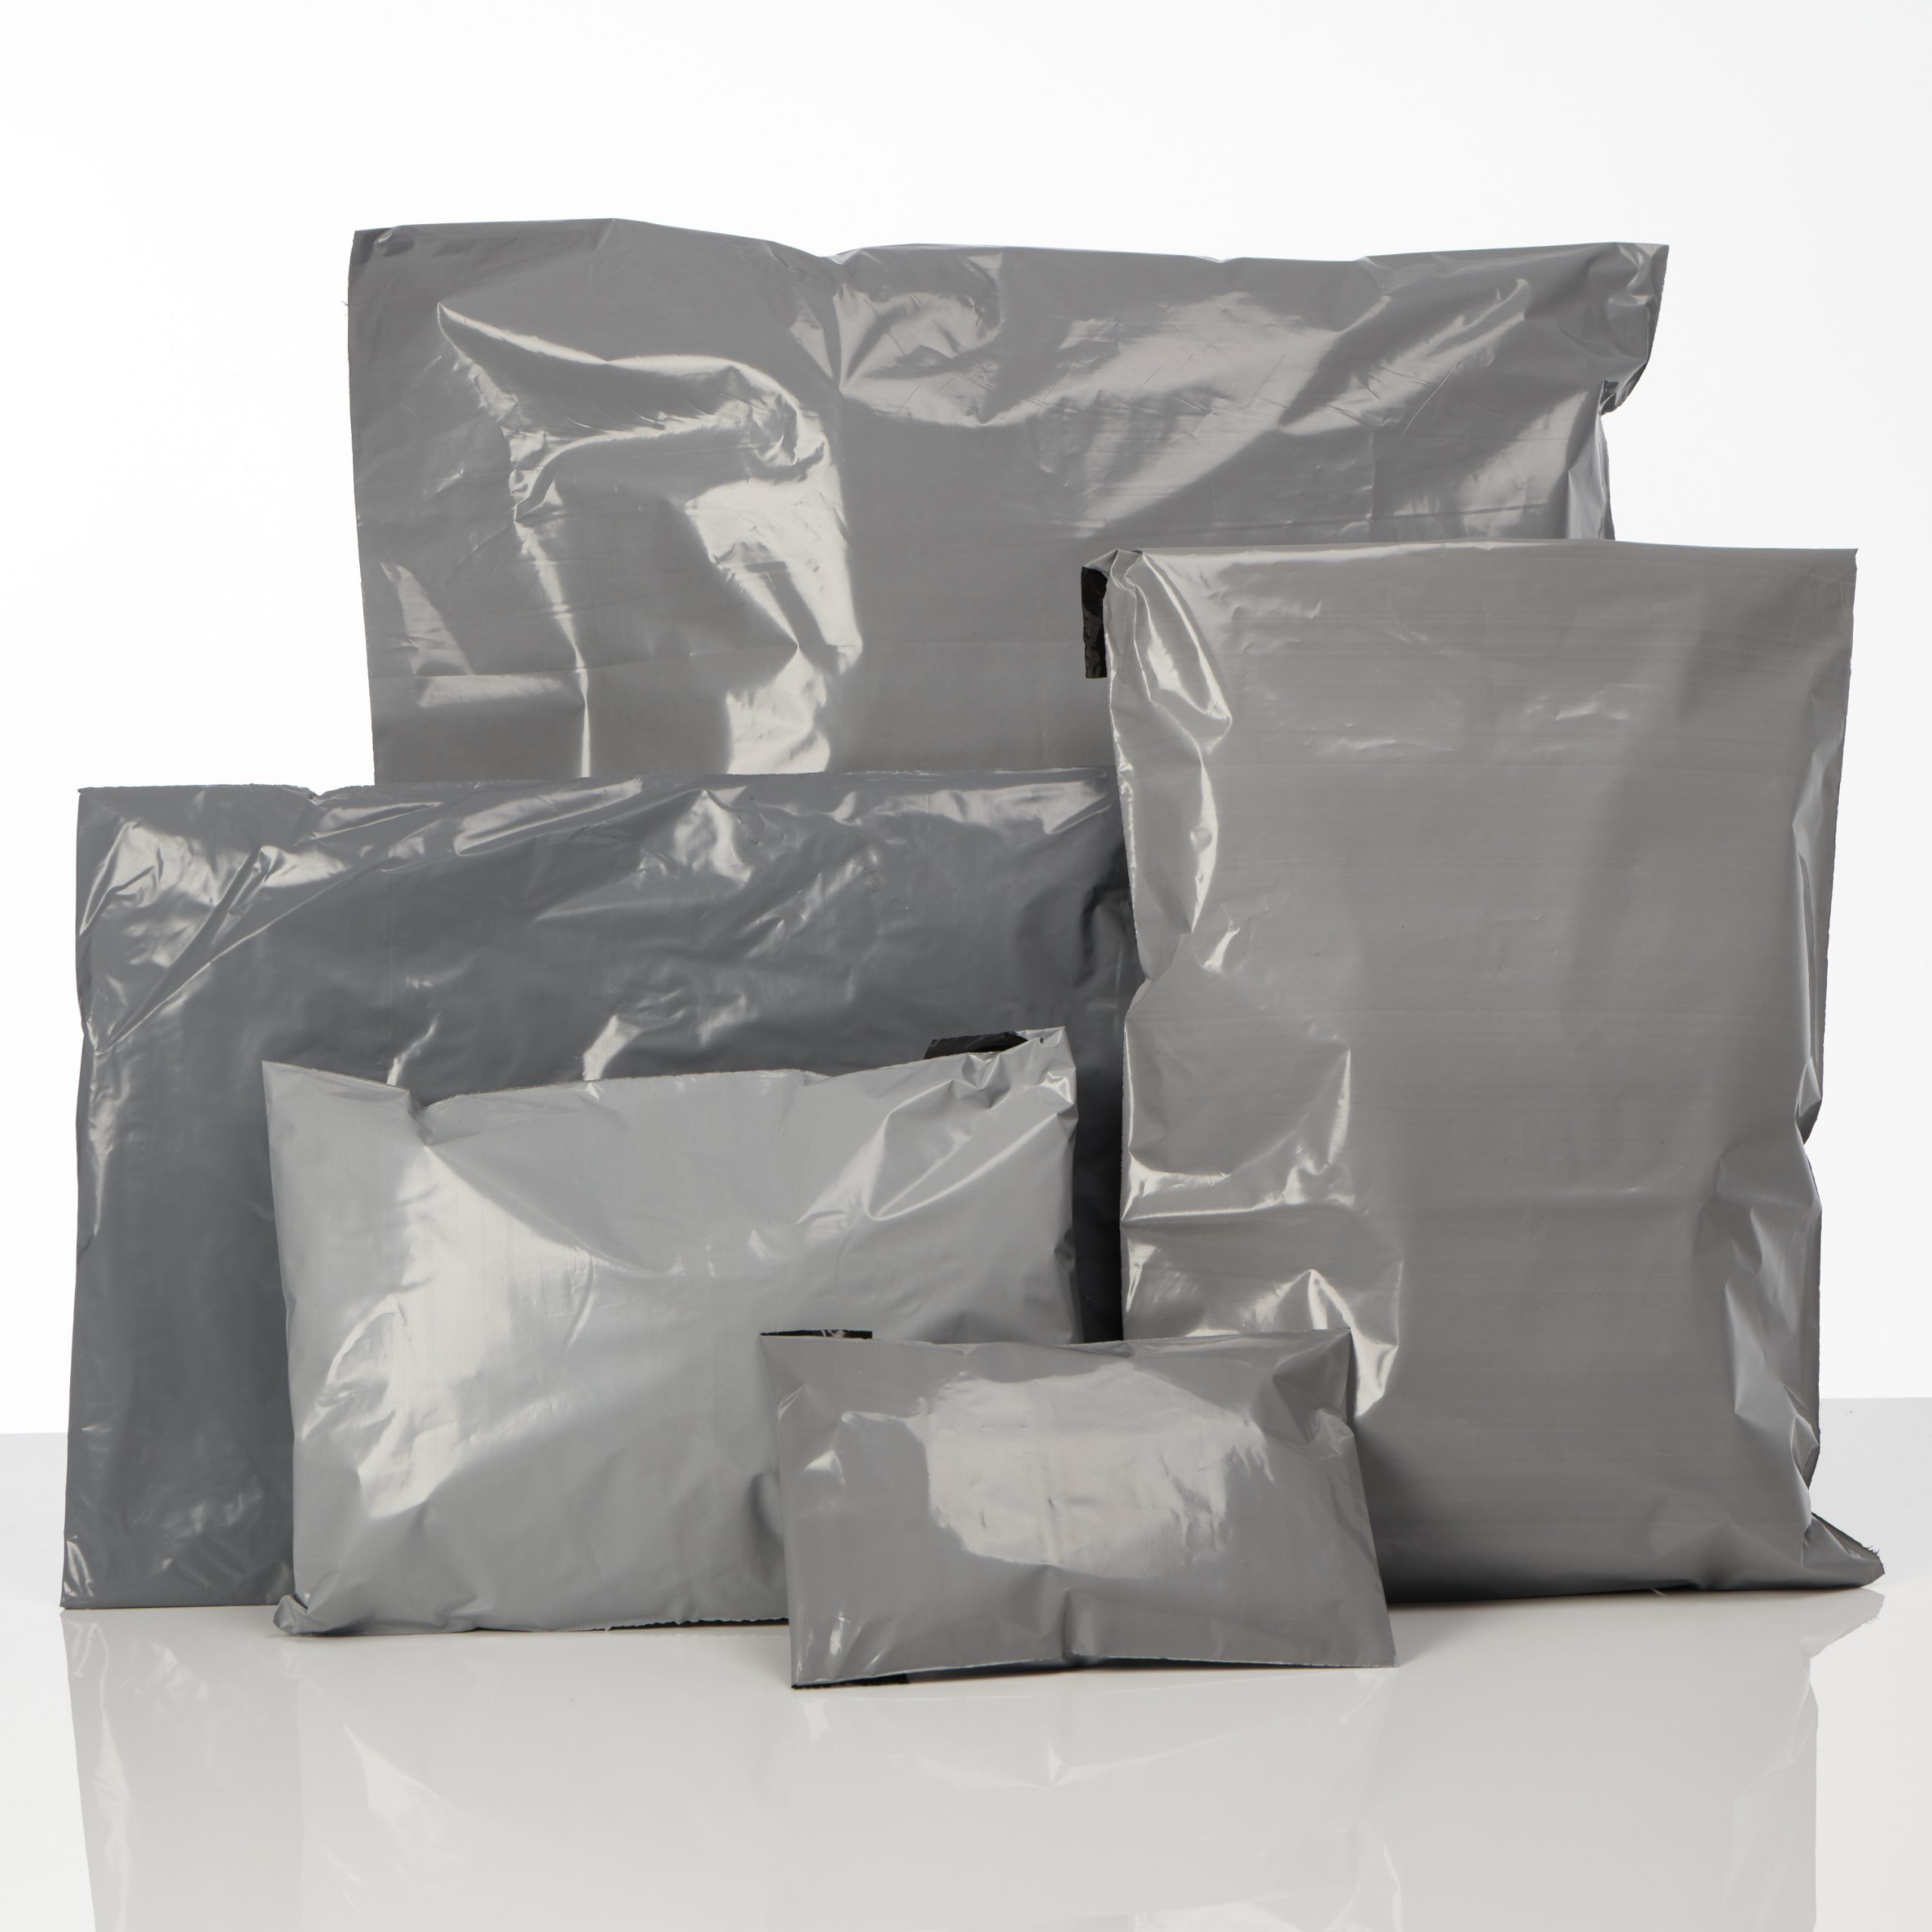 GREY RECYCLED MAILING BAGS POSTAL SACKS PLASTIC ENVELOPES POST DISPATCH BAG